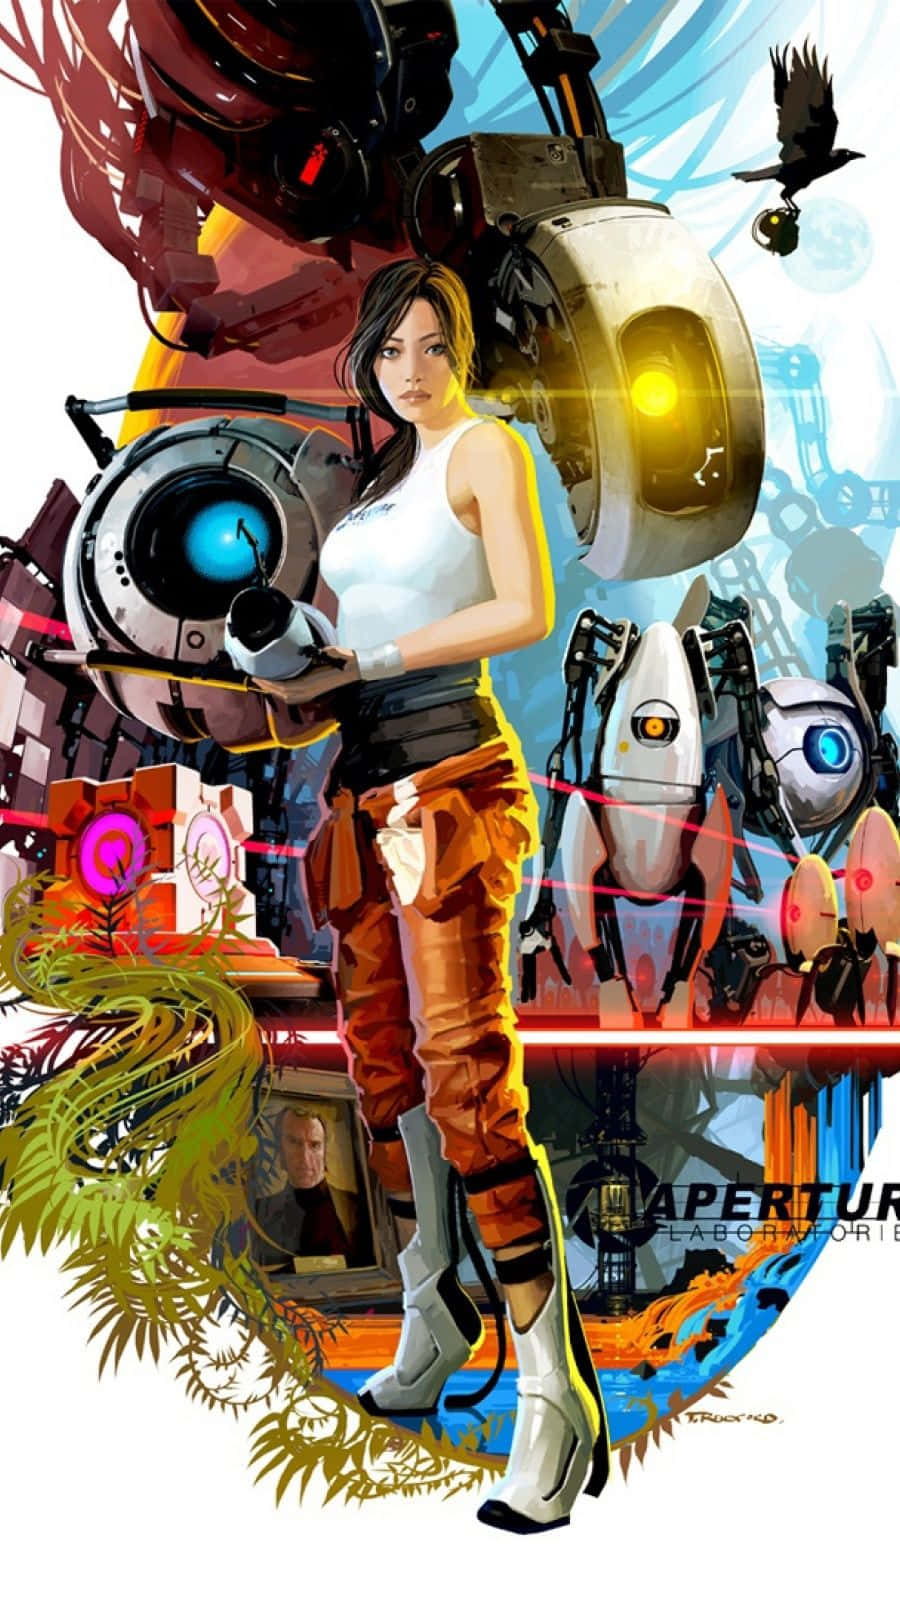 Et plakat til spillet 'Outpost'